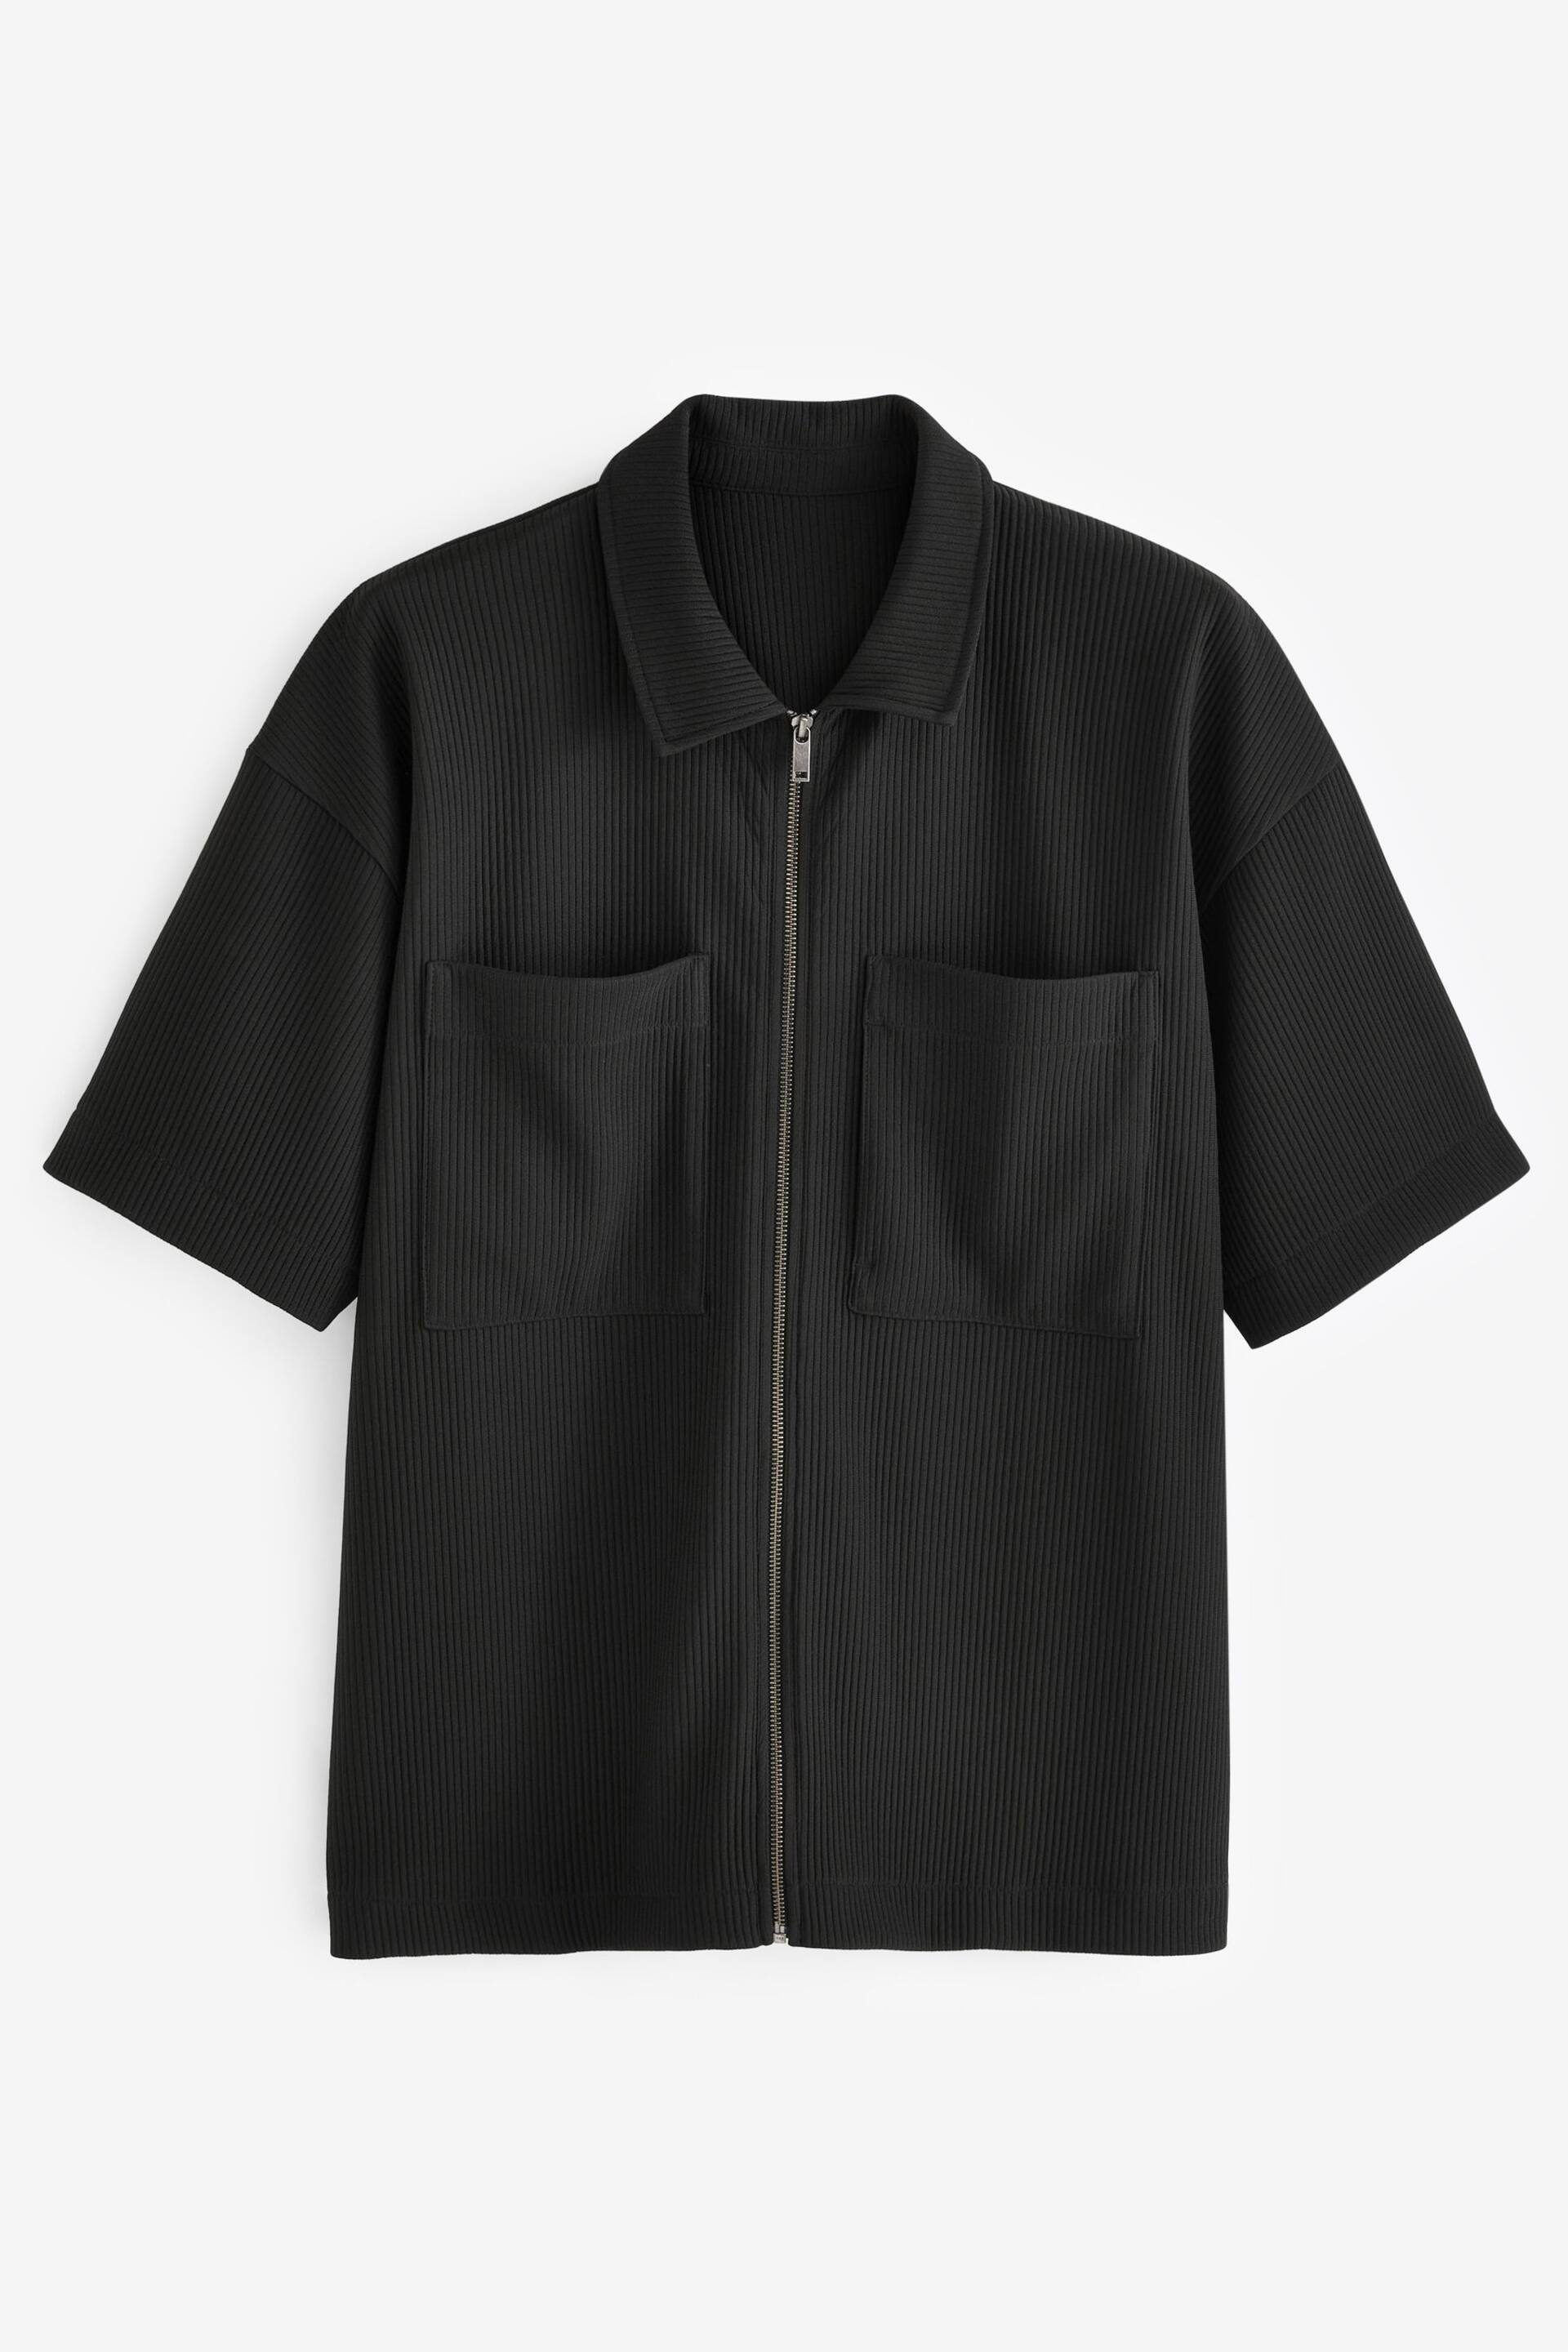 Black EDIT Plisse Polo Shirt - Image 7 of 8